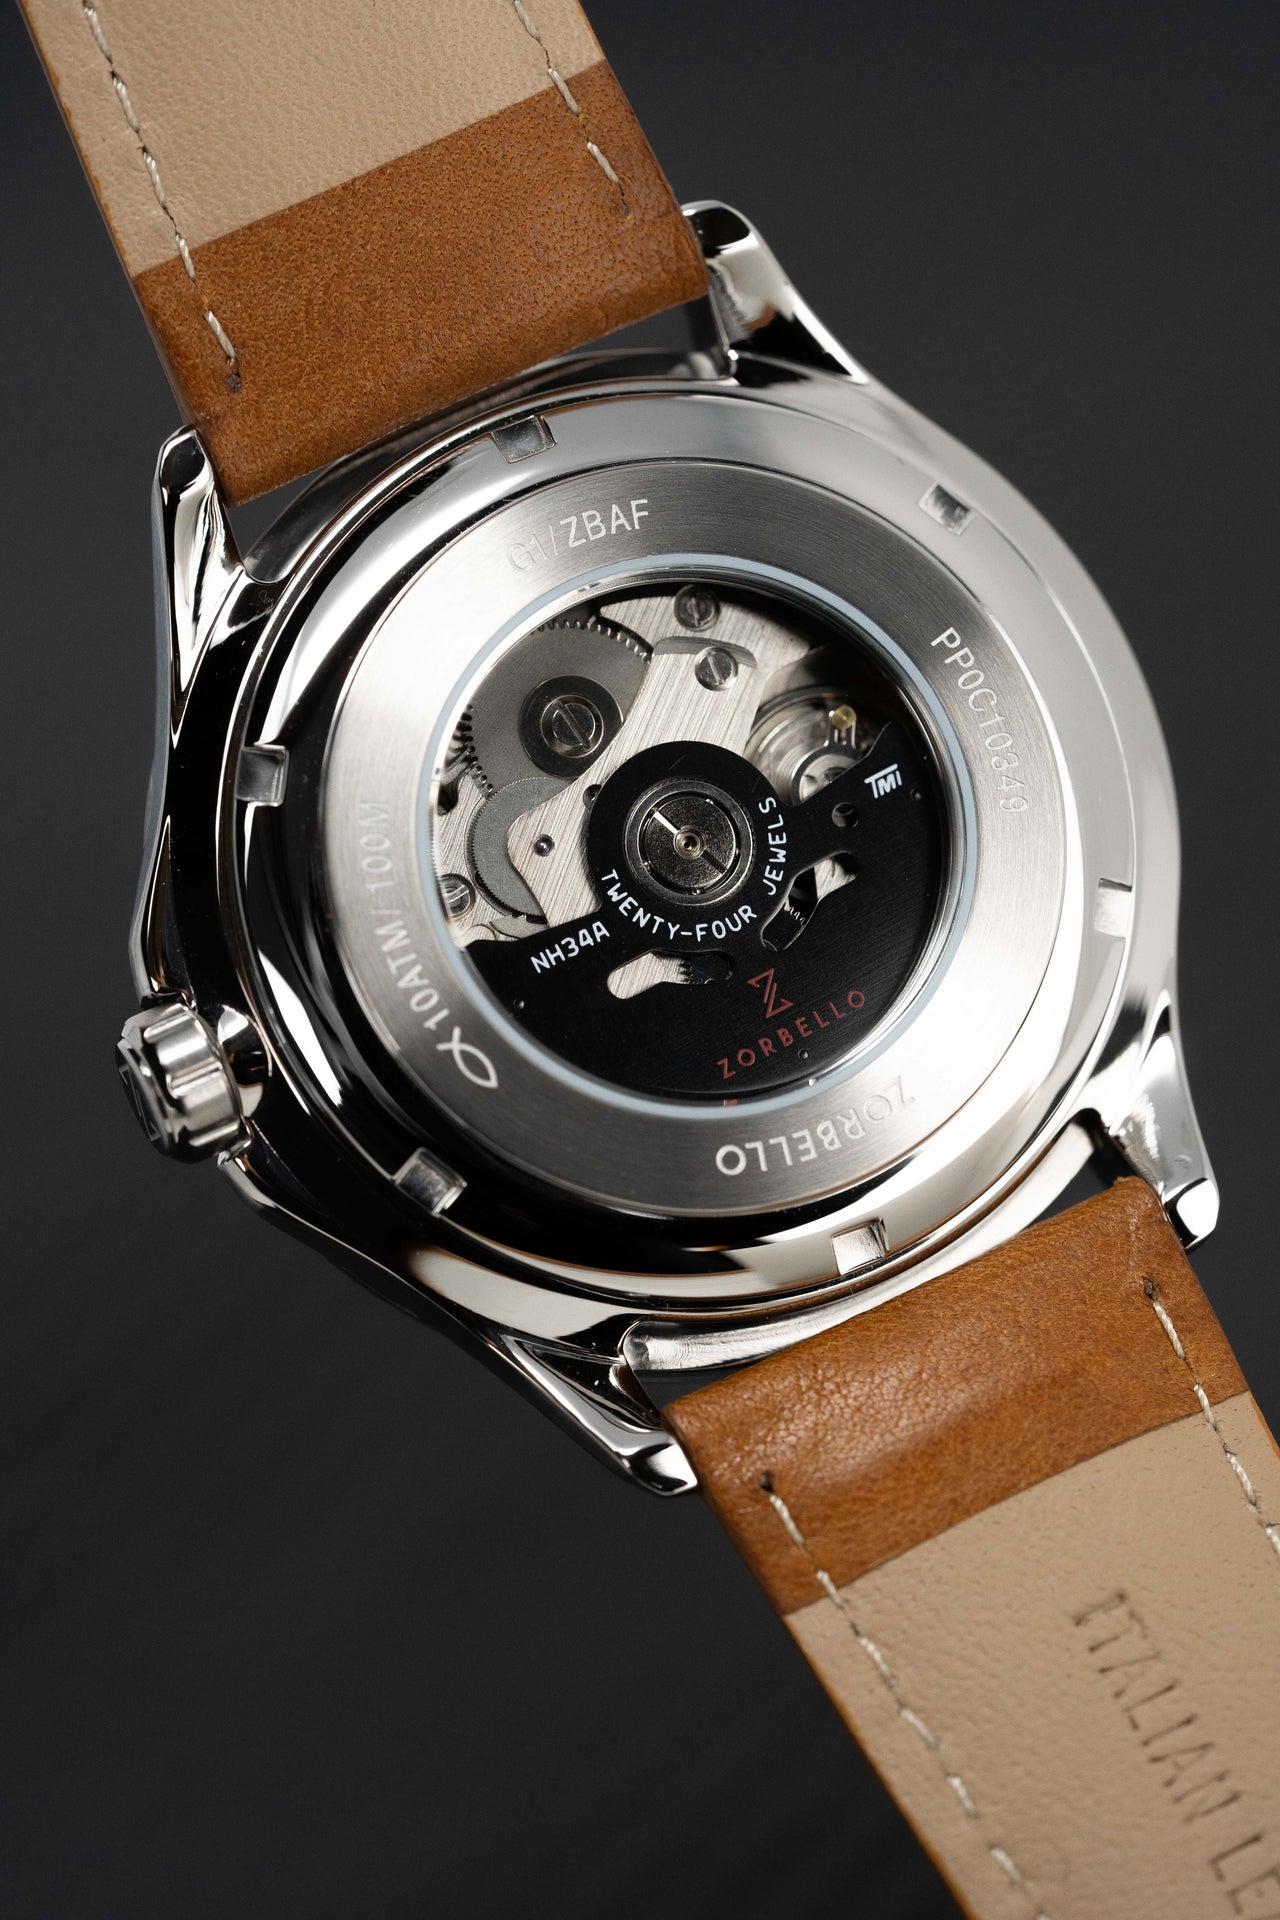 Zorbello Mechanical Watch G1 GMT Blue LumiNova® ZBAF001